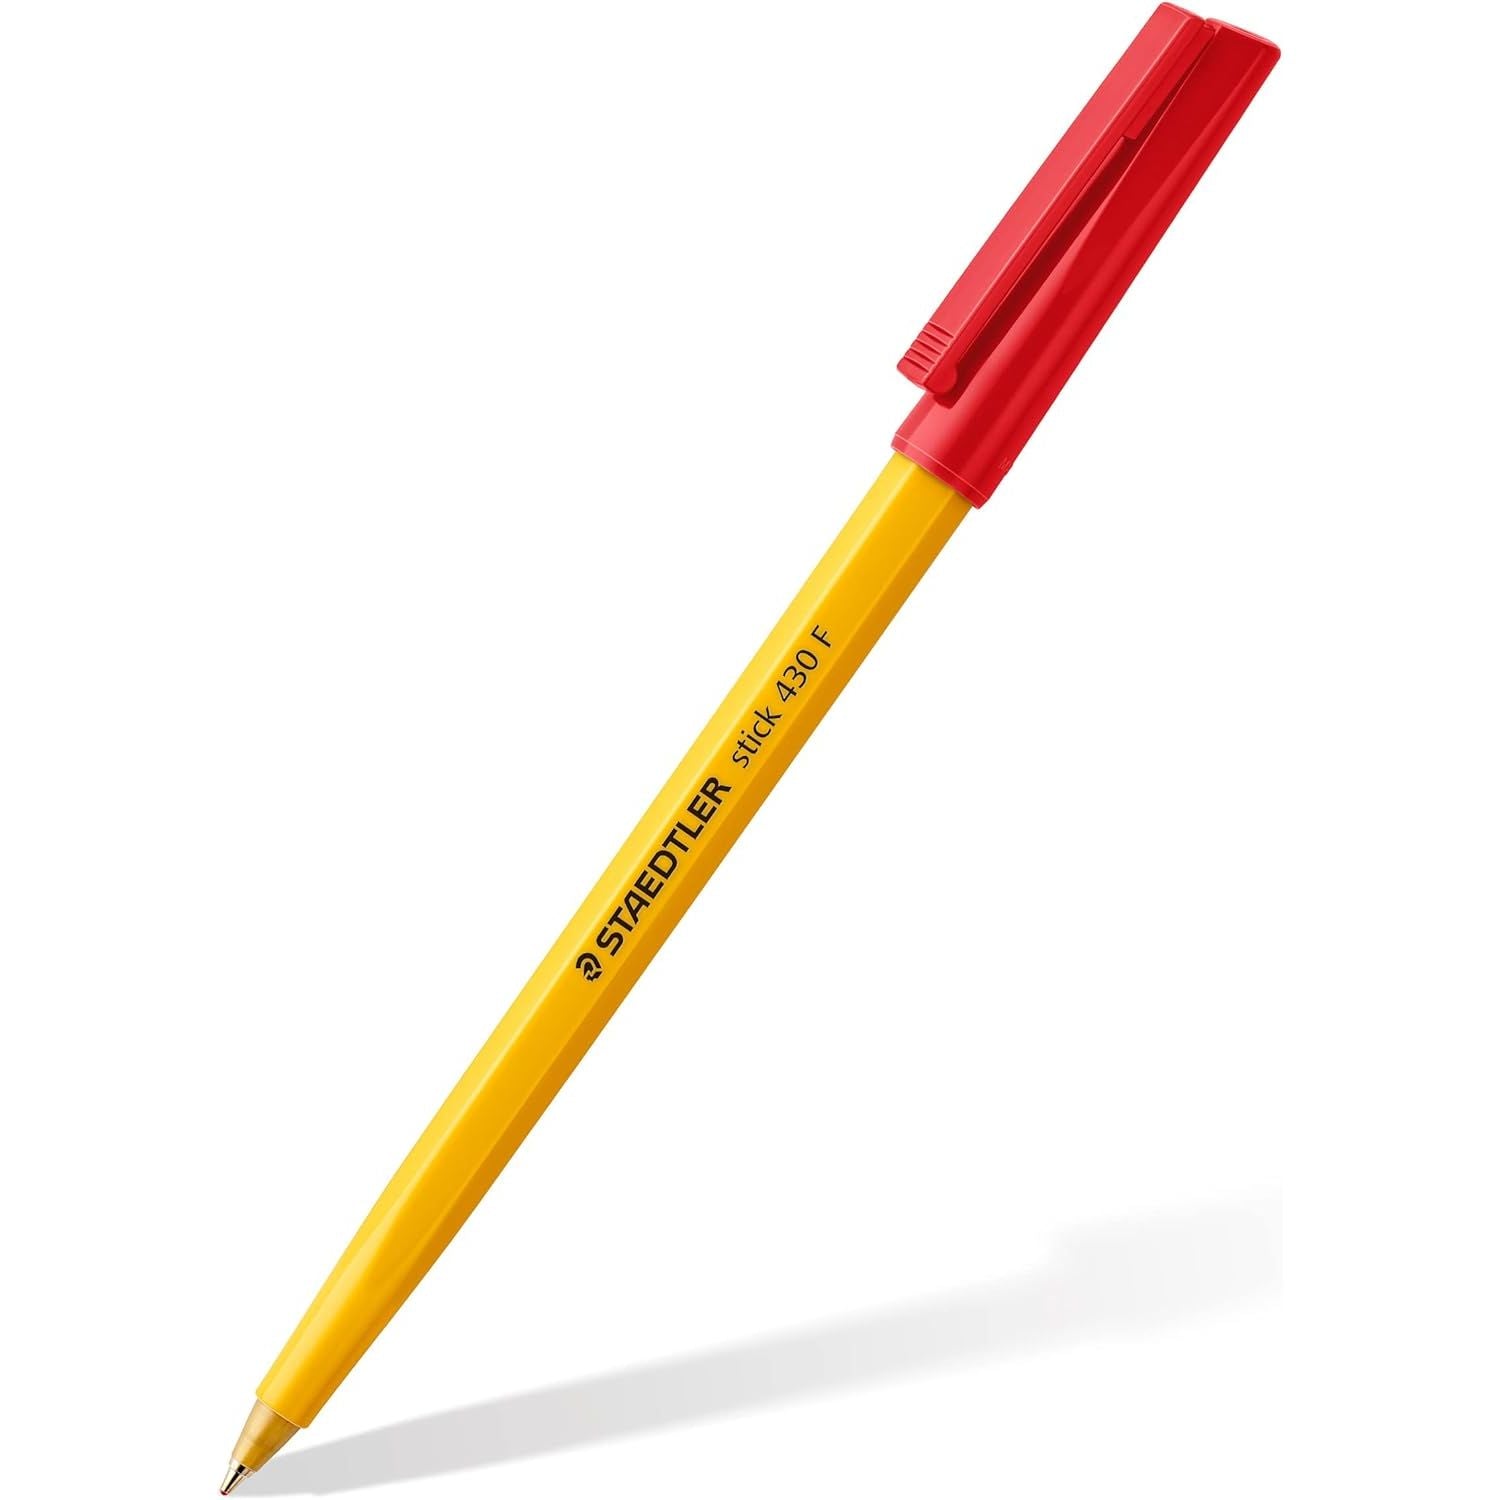 STAEDTLER Medium Stick 430 F-2 Ballpoint Pen Fine, Red, Pack of 10